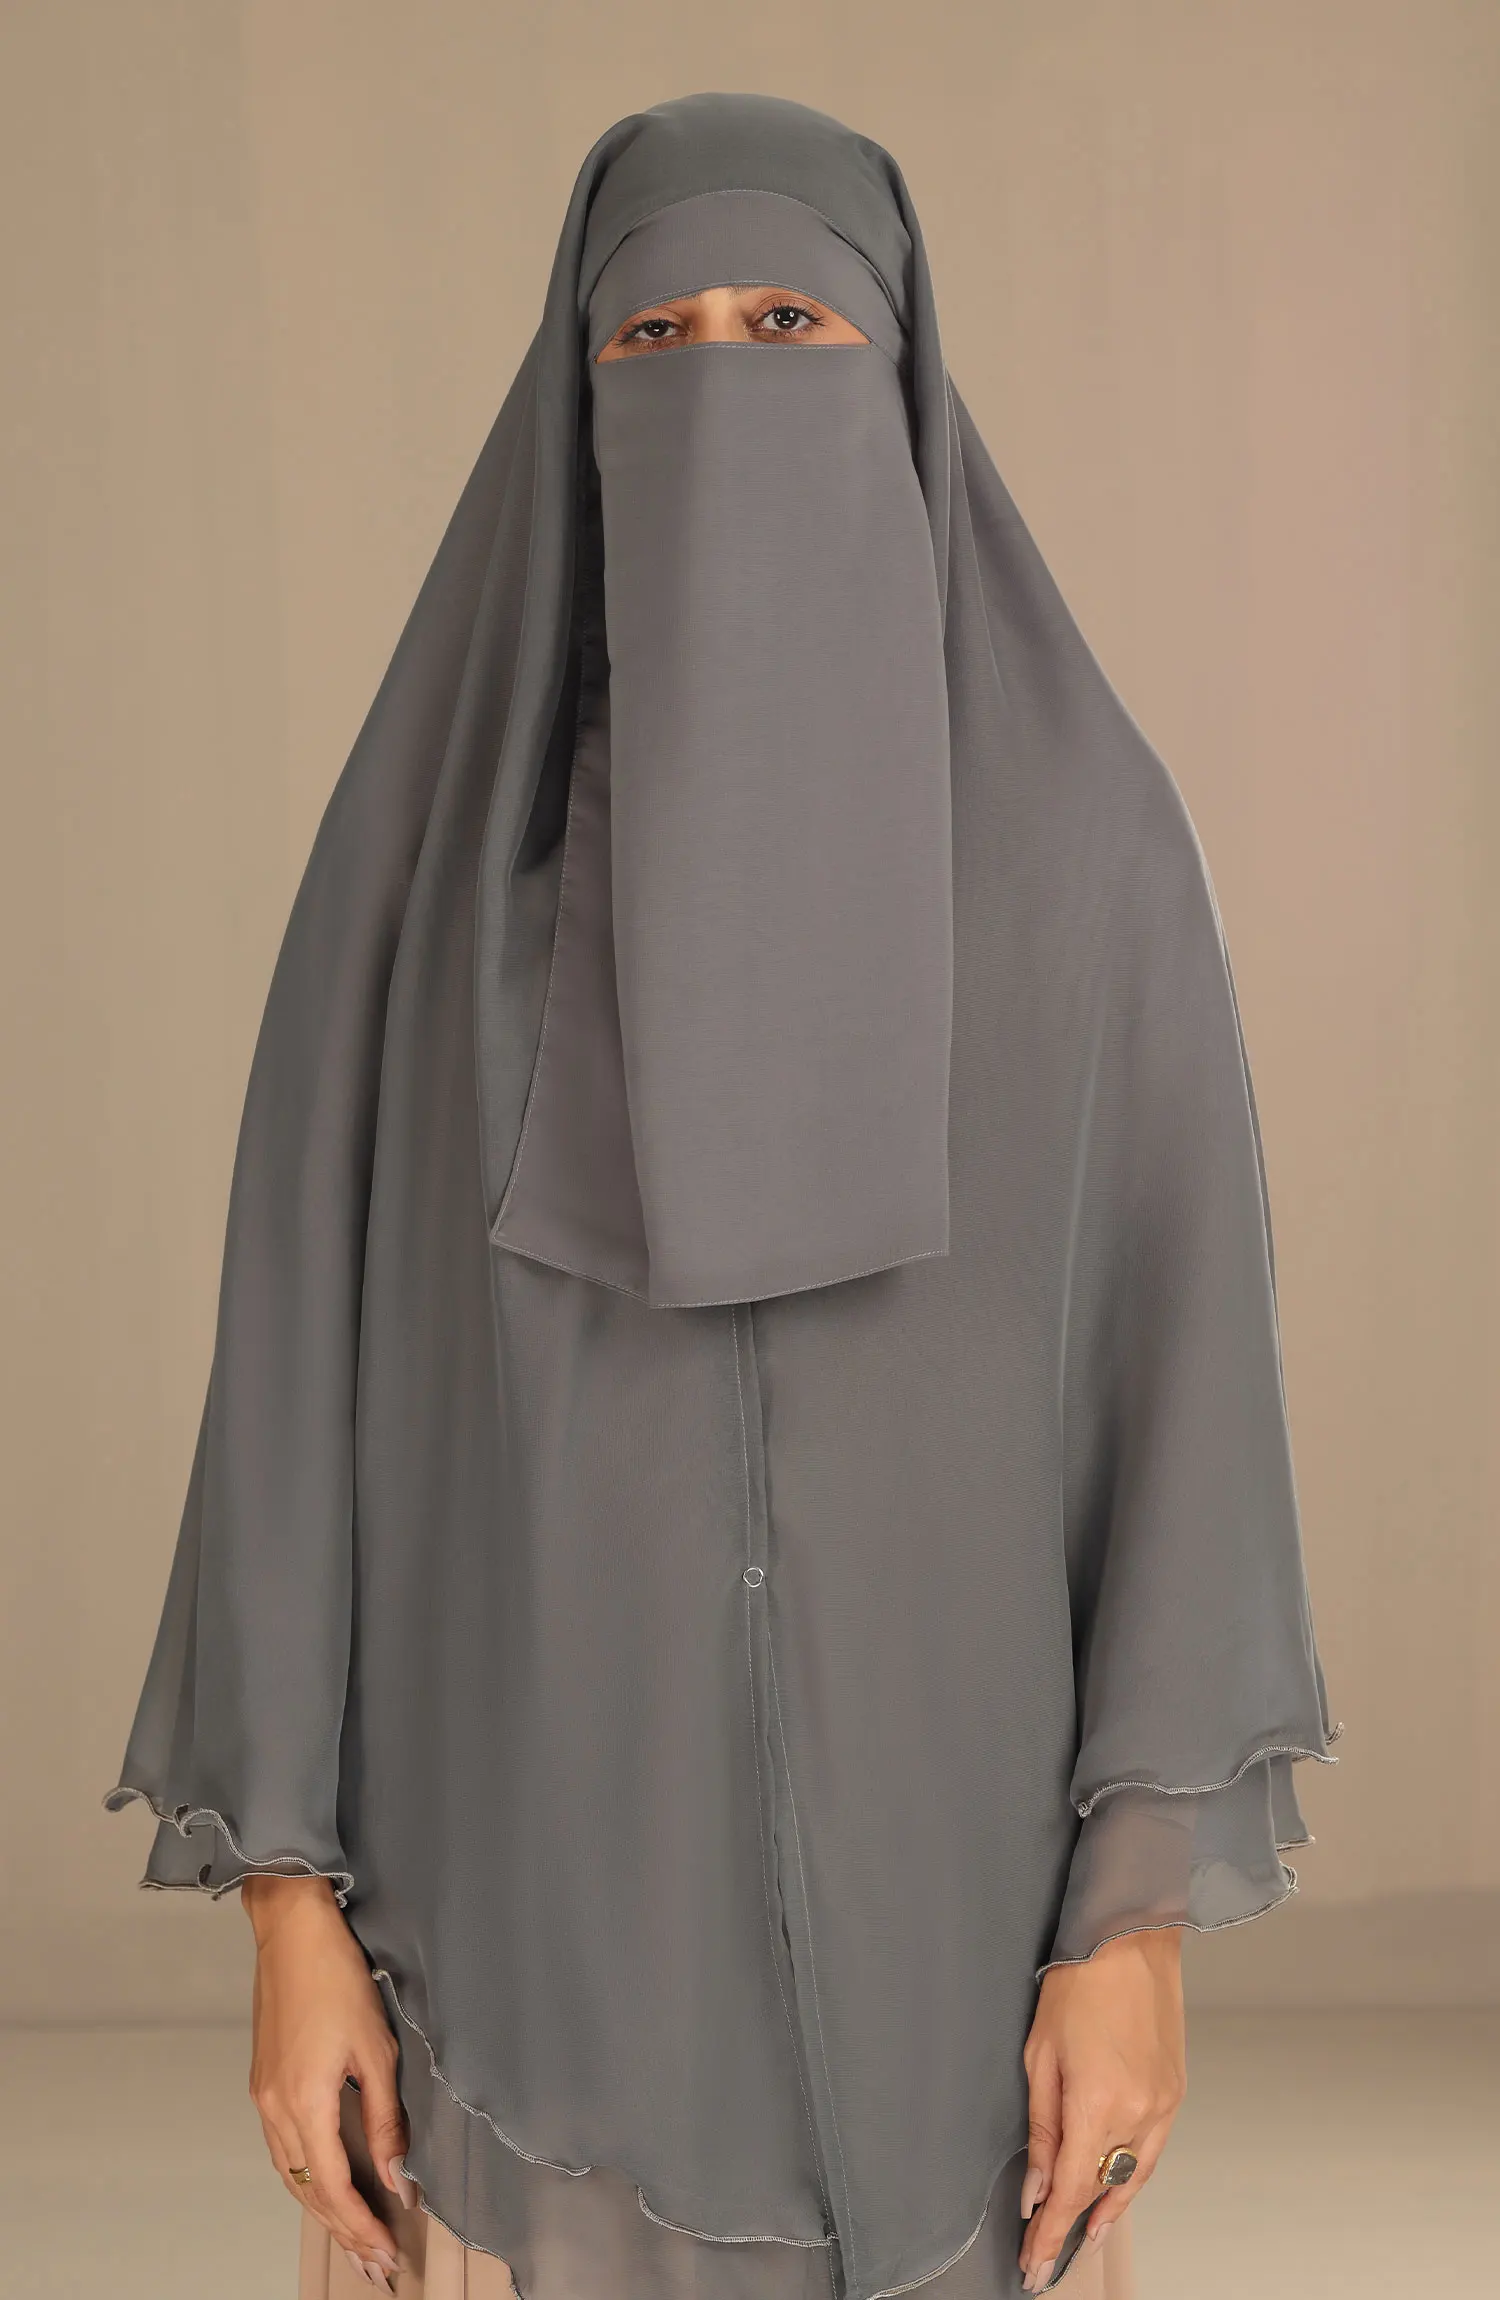 Black Camels Al-Amirah Hijab Collection - AAHC-09